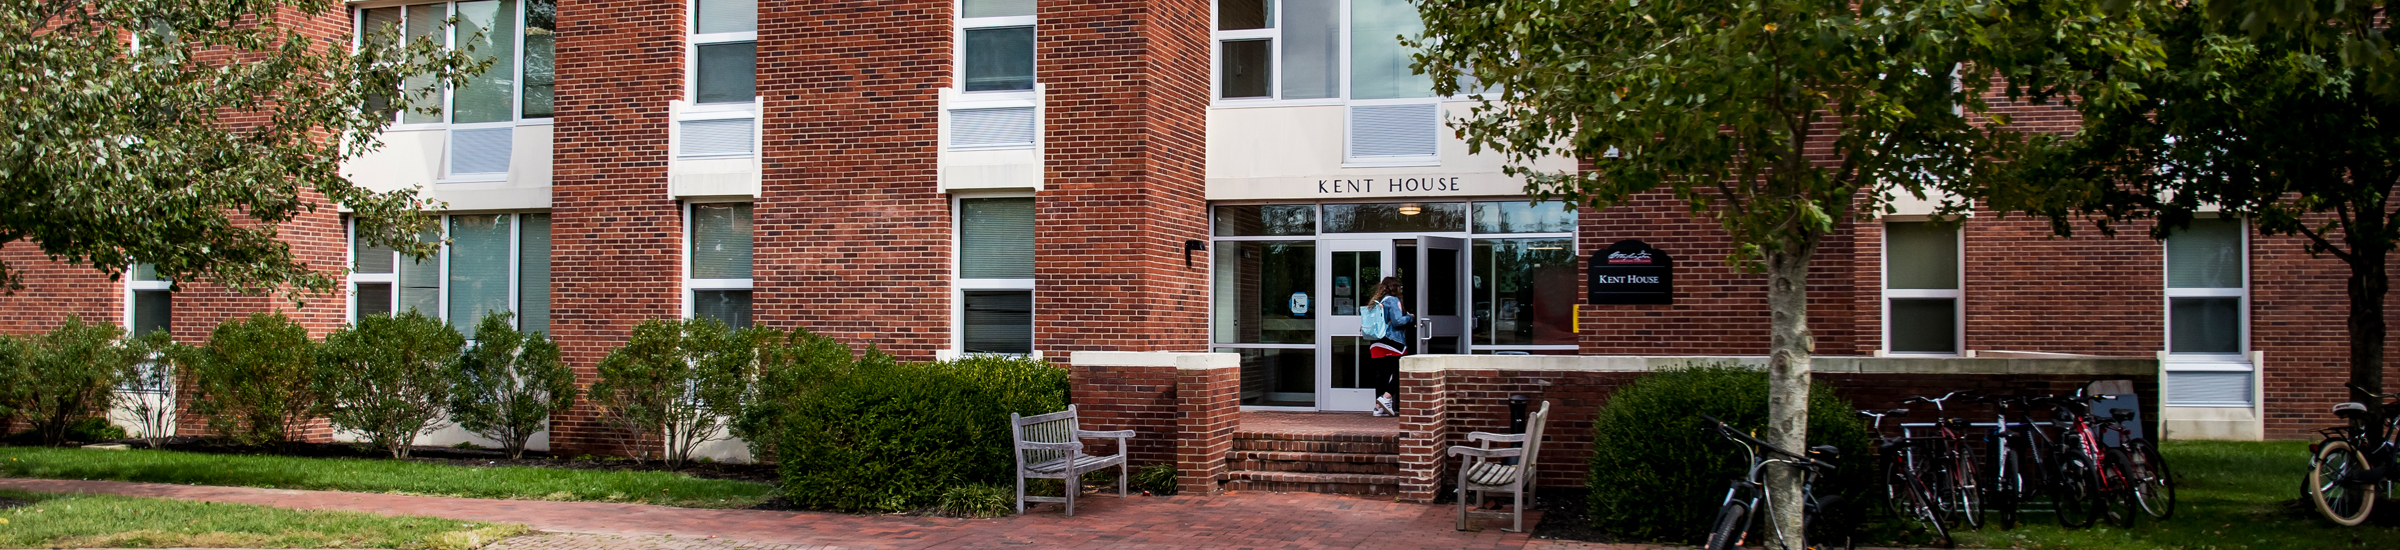 Kent House Exterior Image